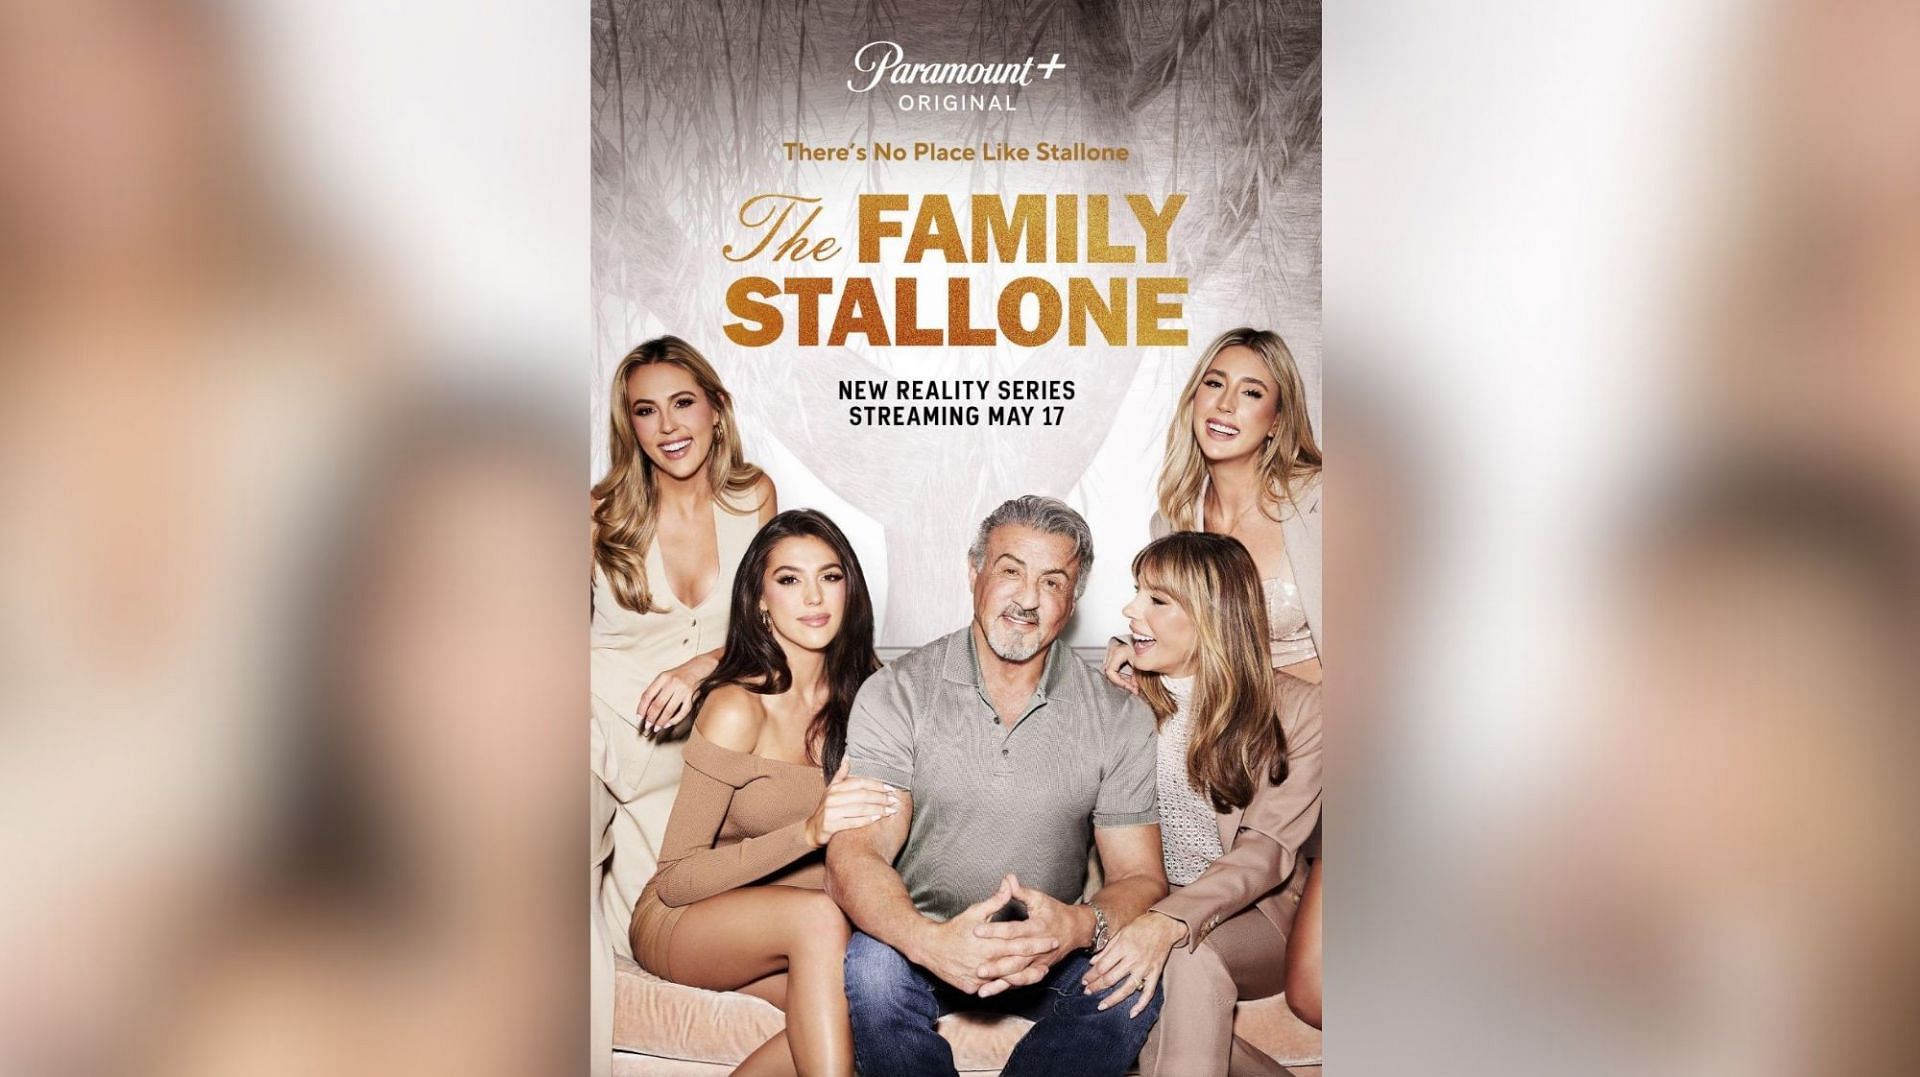 The Family Stallone (Image via Paramount+)